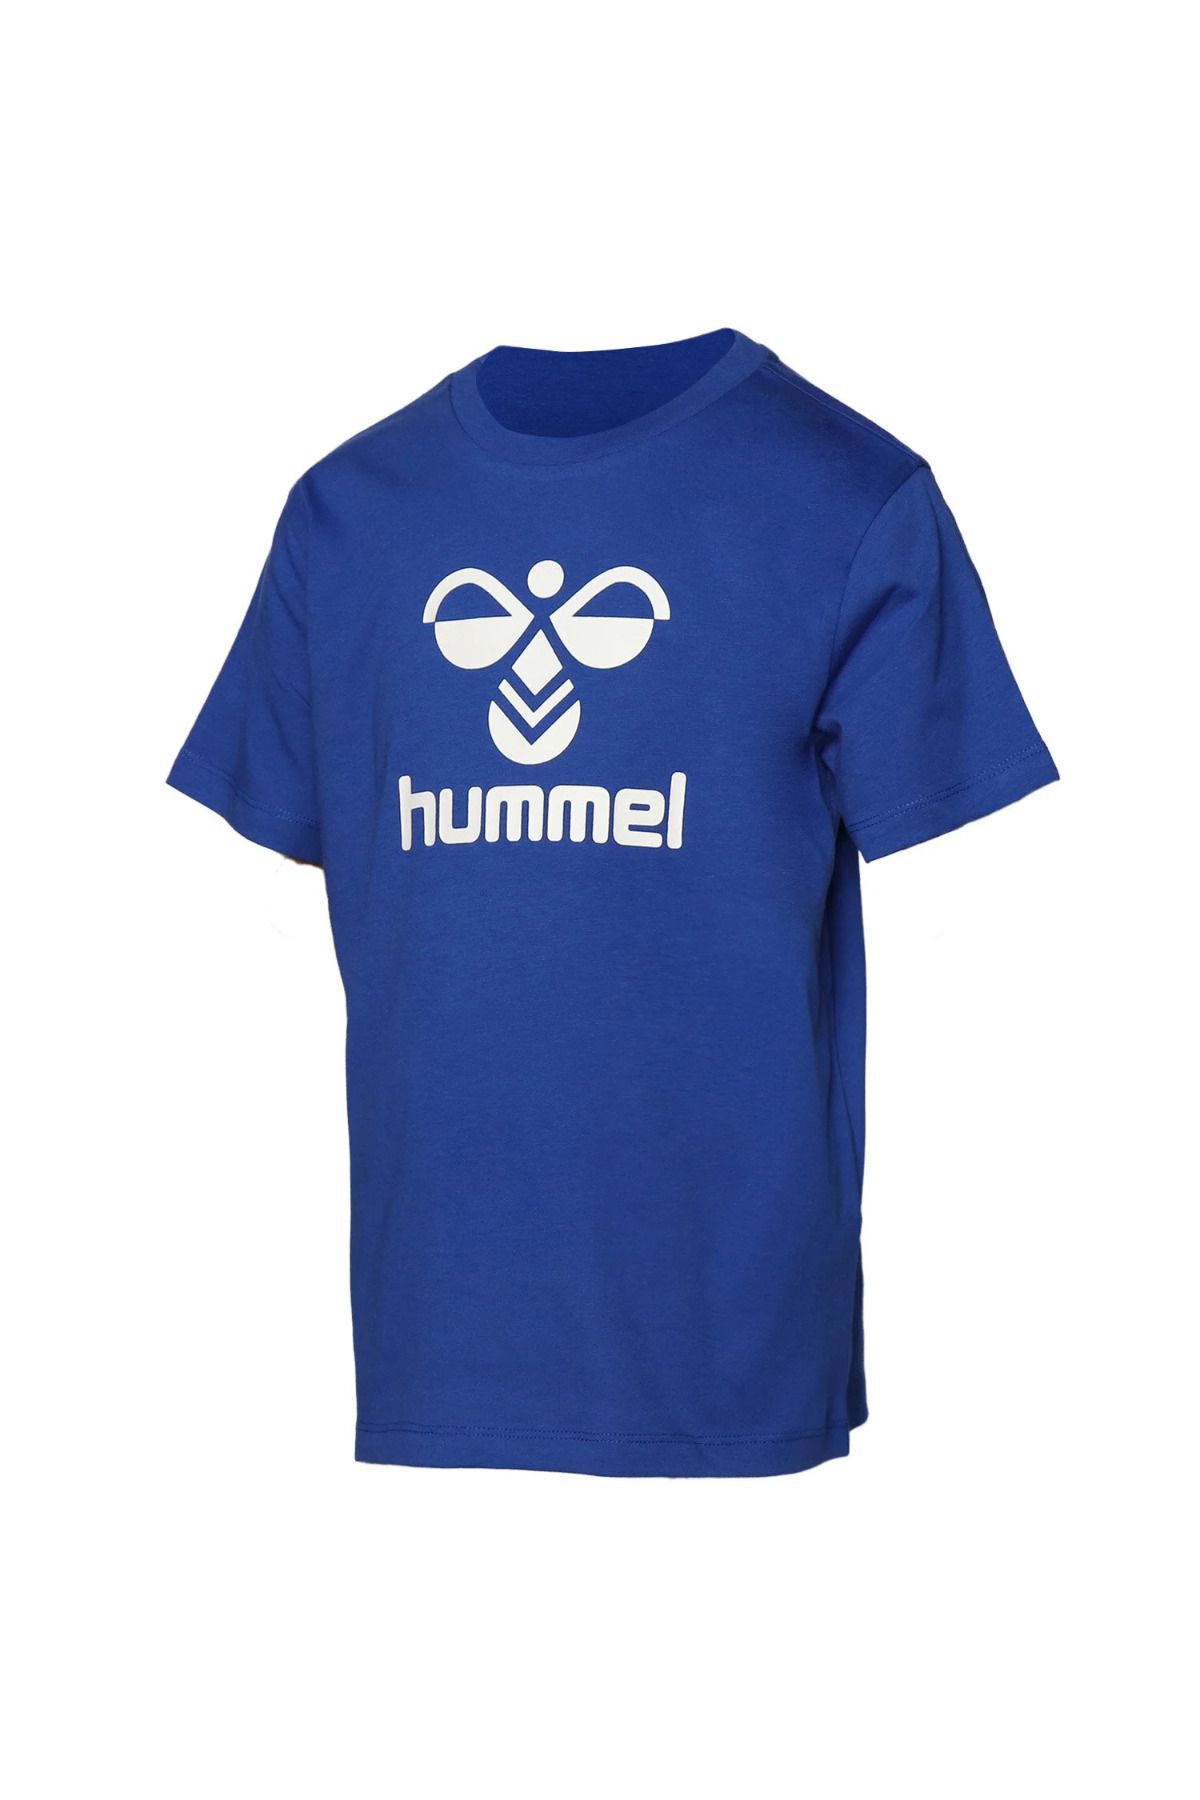 hummel لورن بچه ها یقه آبی دور t -shirt